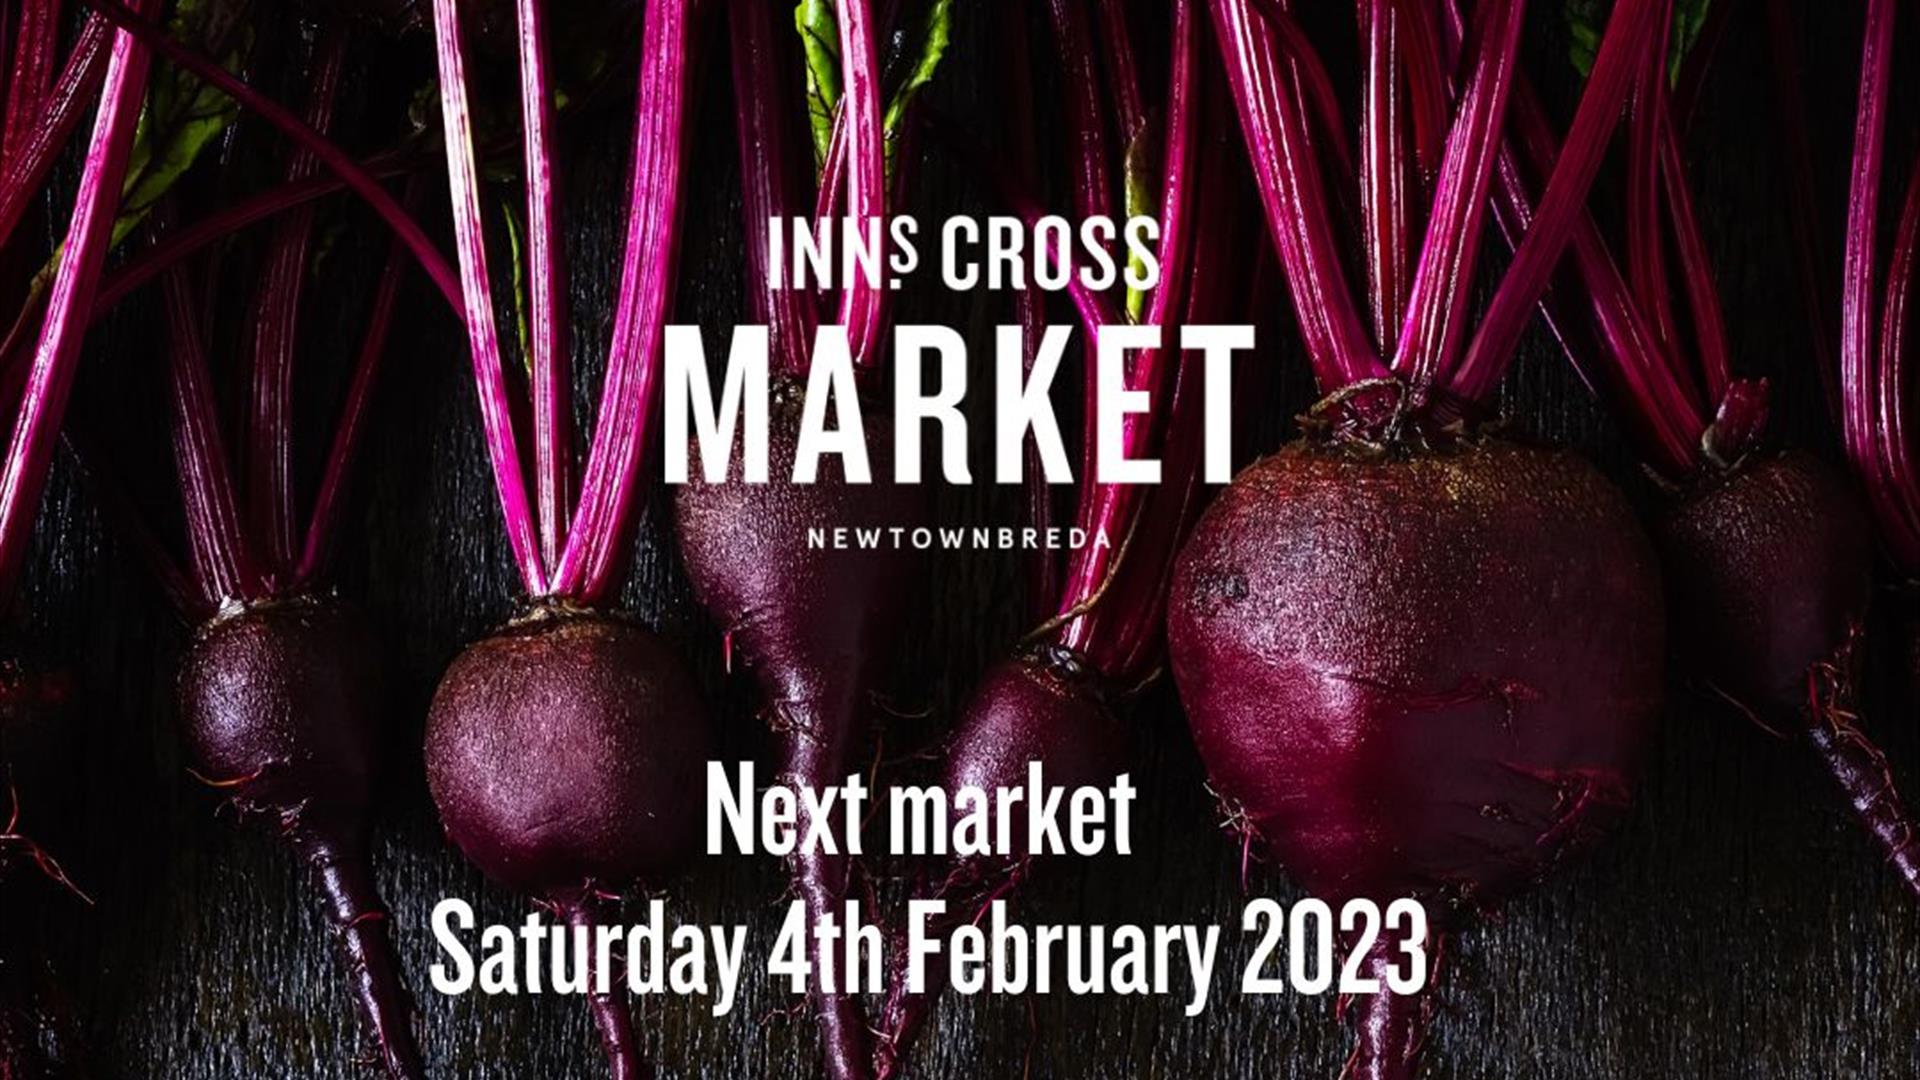 Image is of vegetables advertising the Inns Cross Market in Newtownbreda Belfast